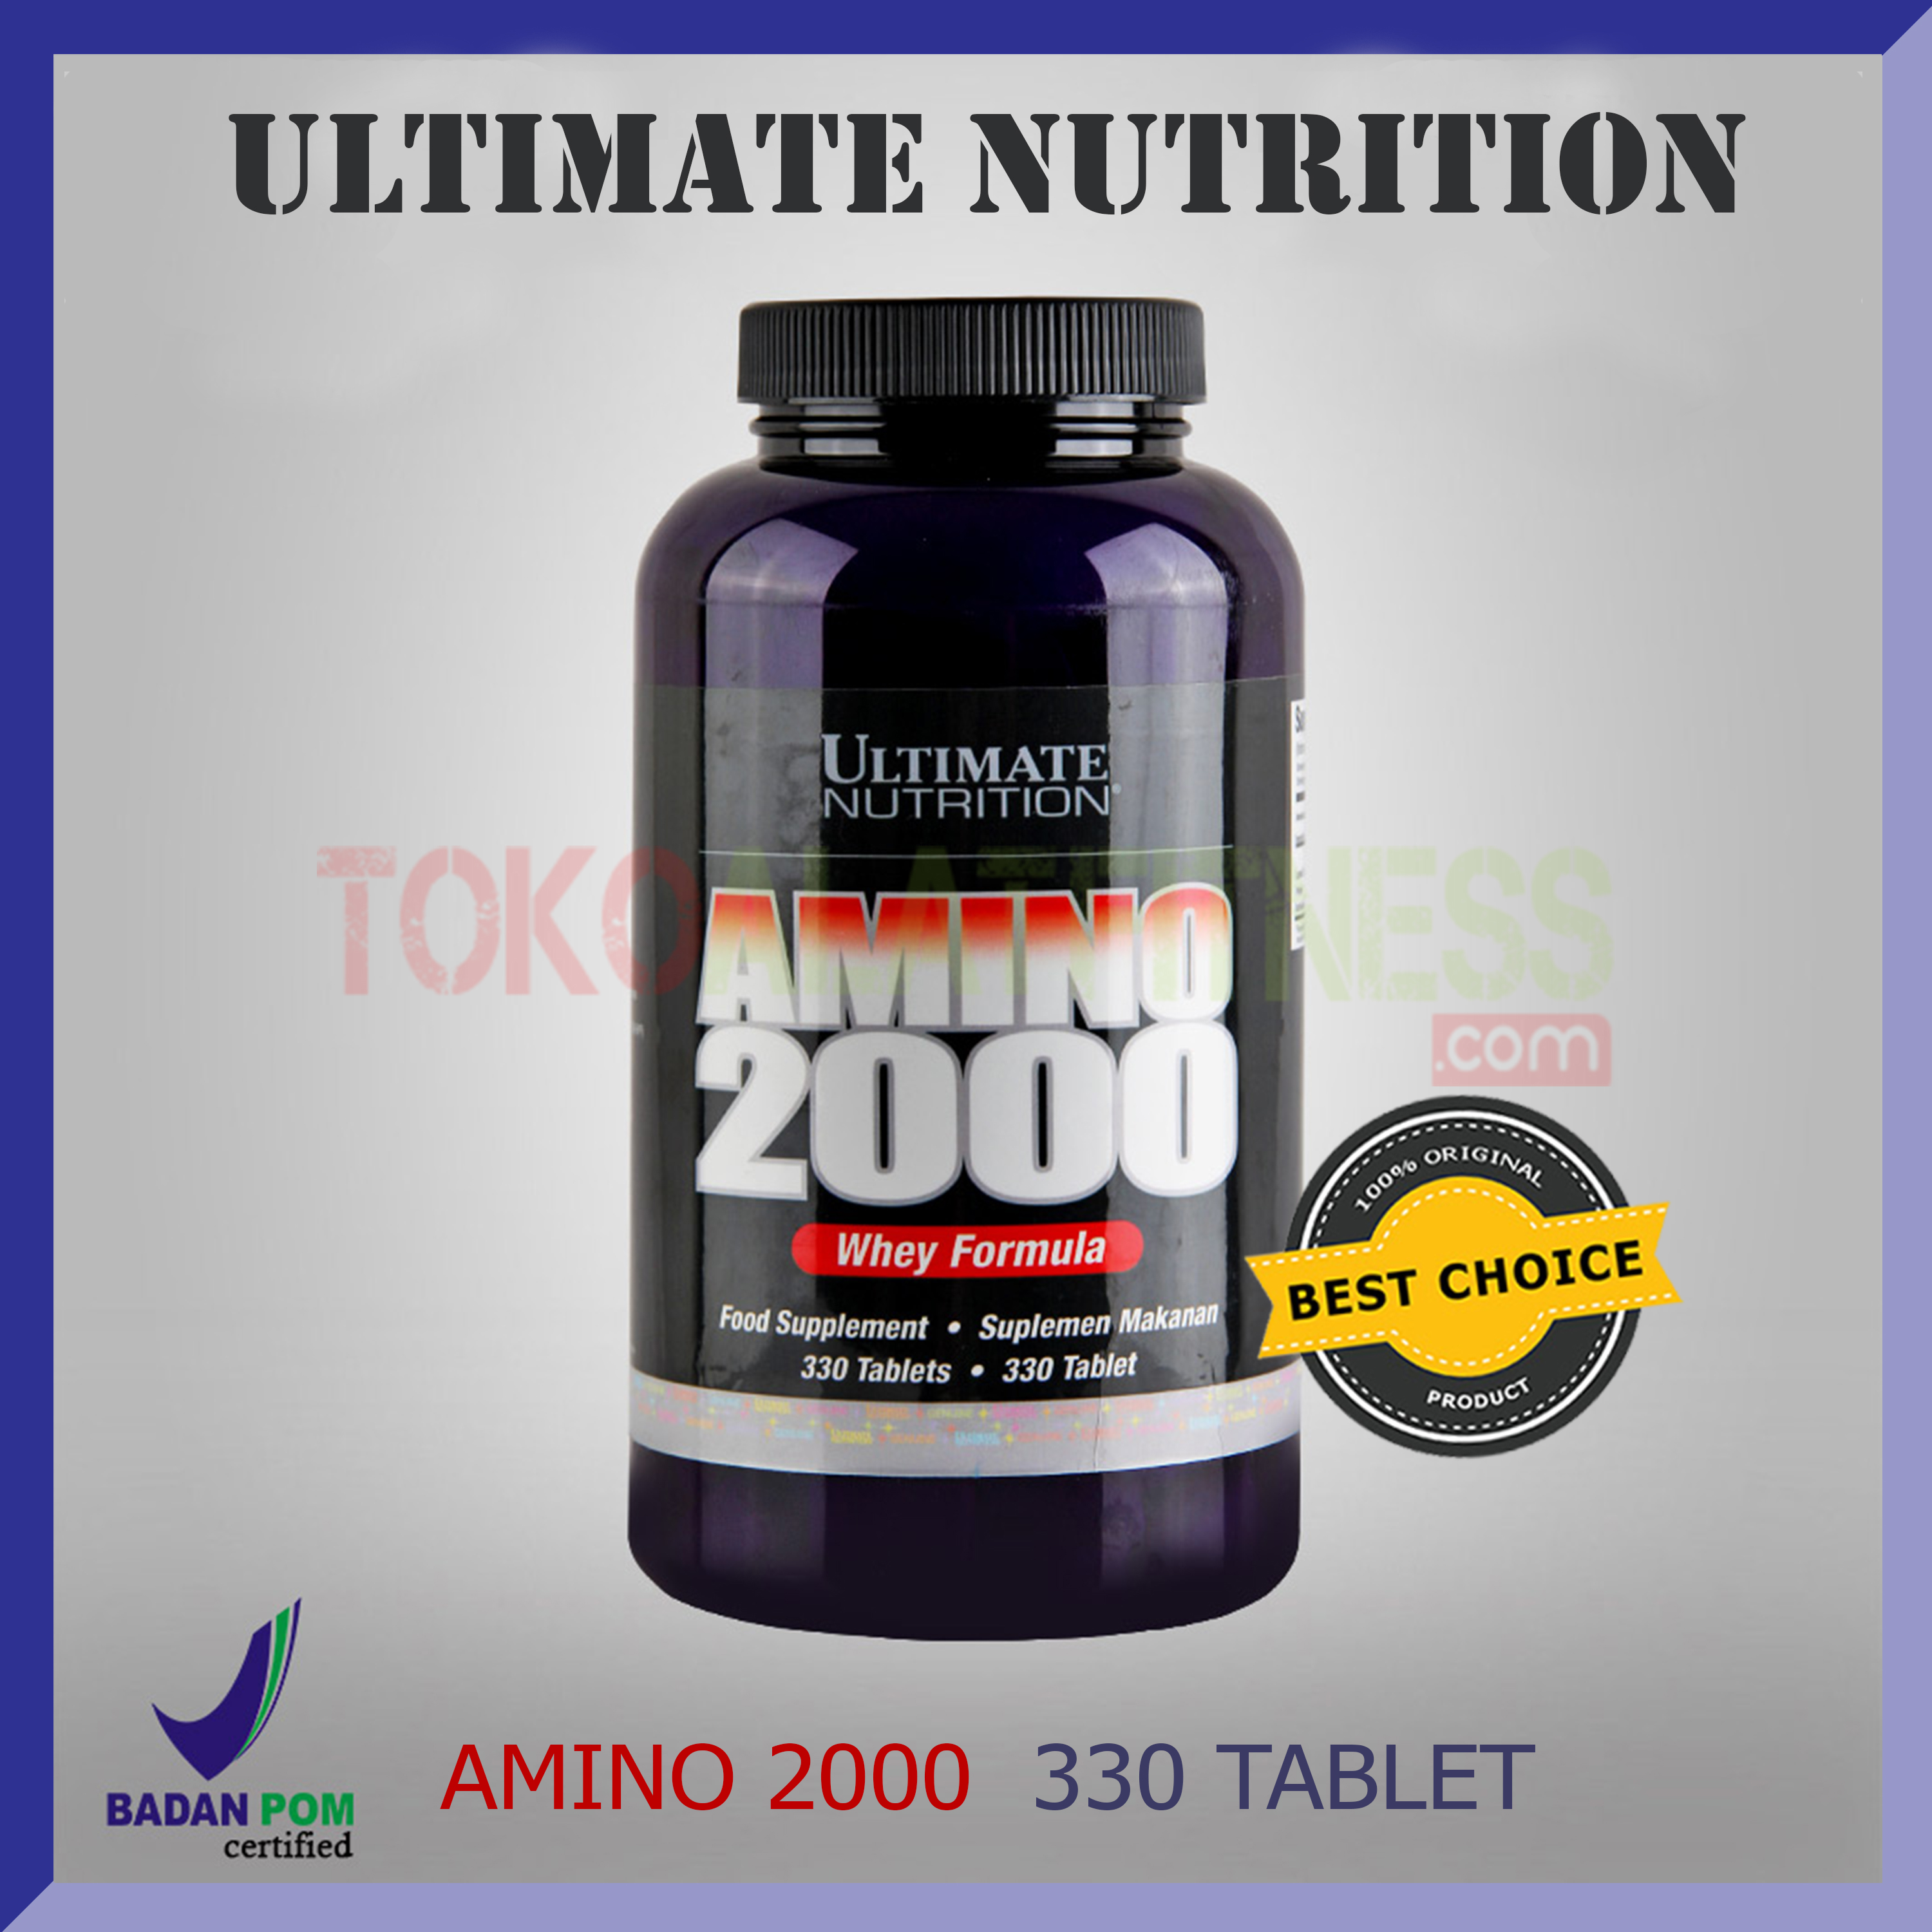 ULTIMATE NUTRITION ASAM AMINO 2000 330 Tabs - Amino 2000, 330 Tabs